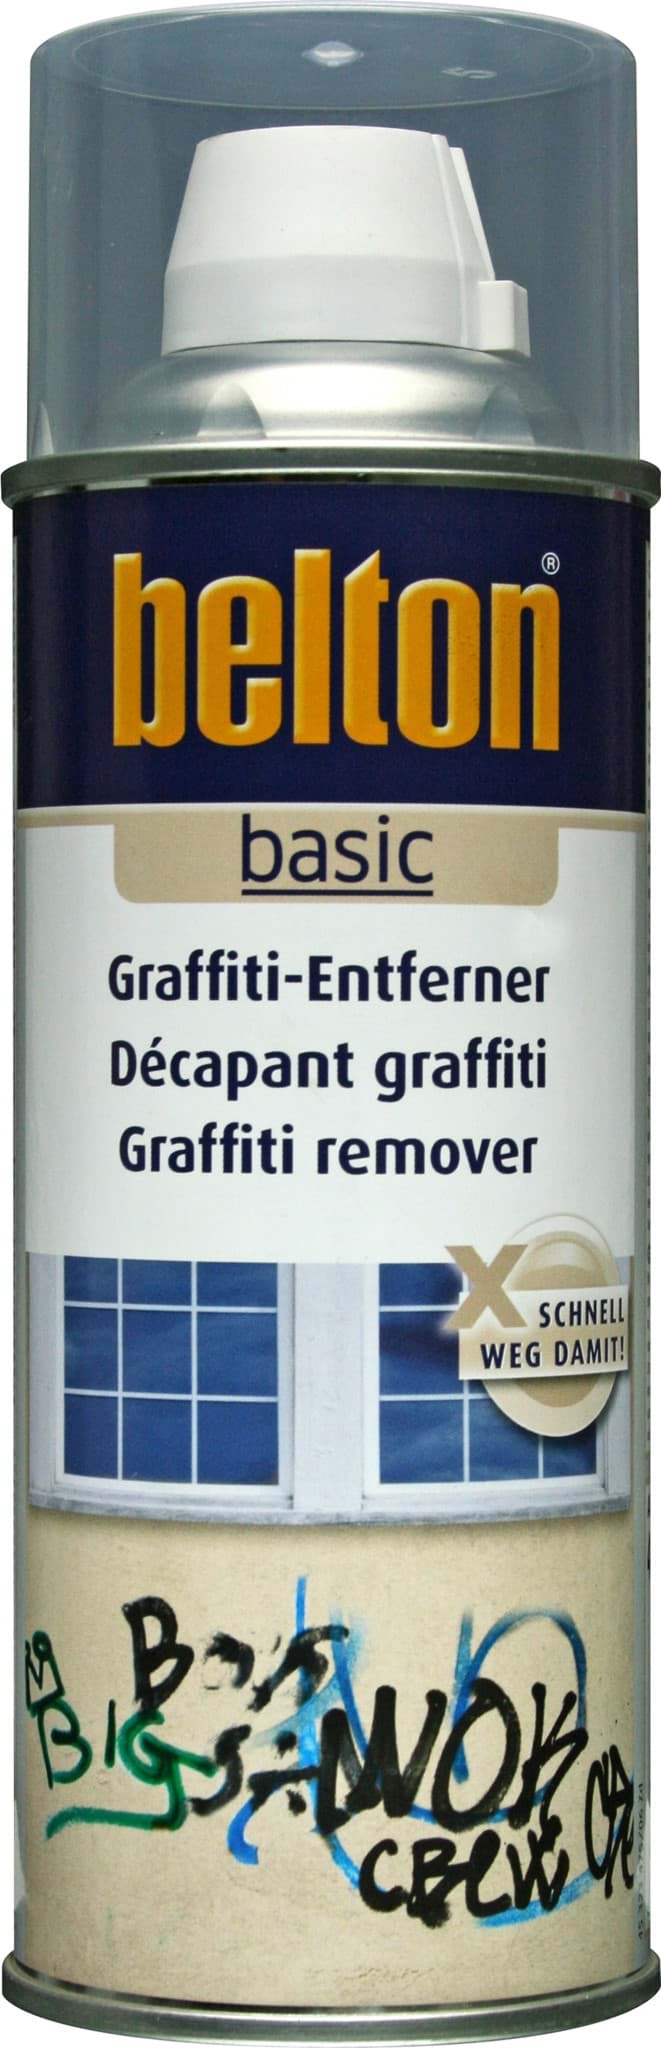 Afbeelding van Belton basic Graffiti-Entferner